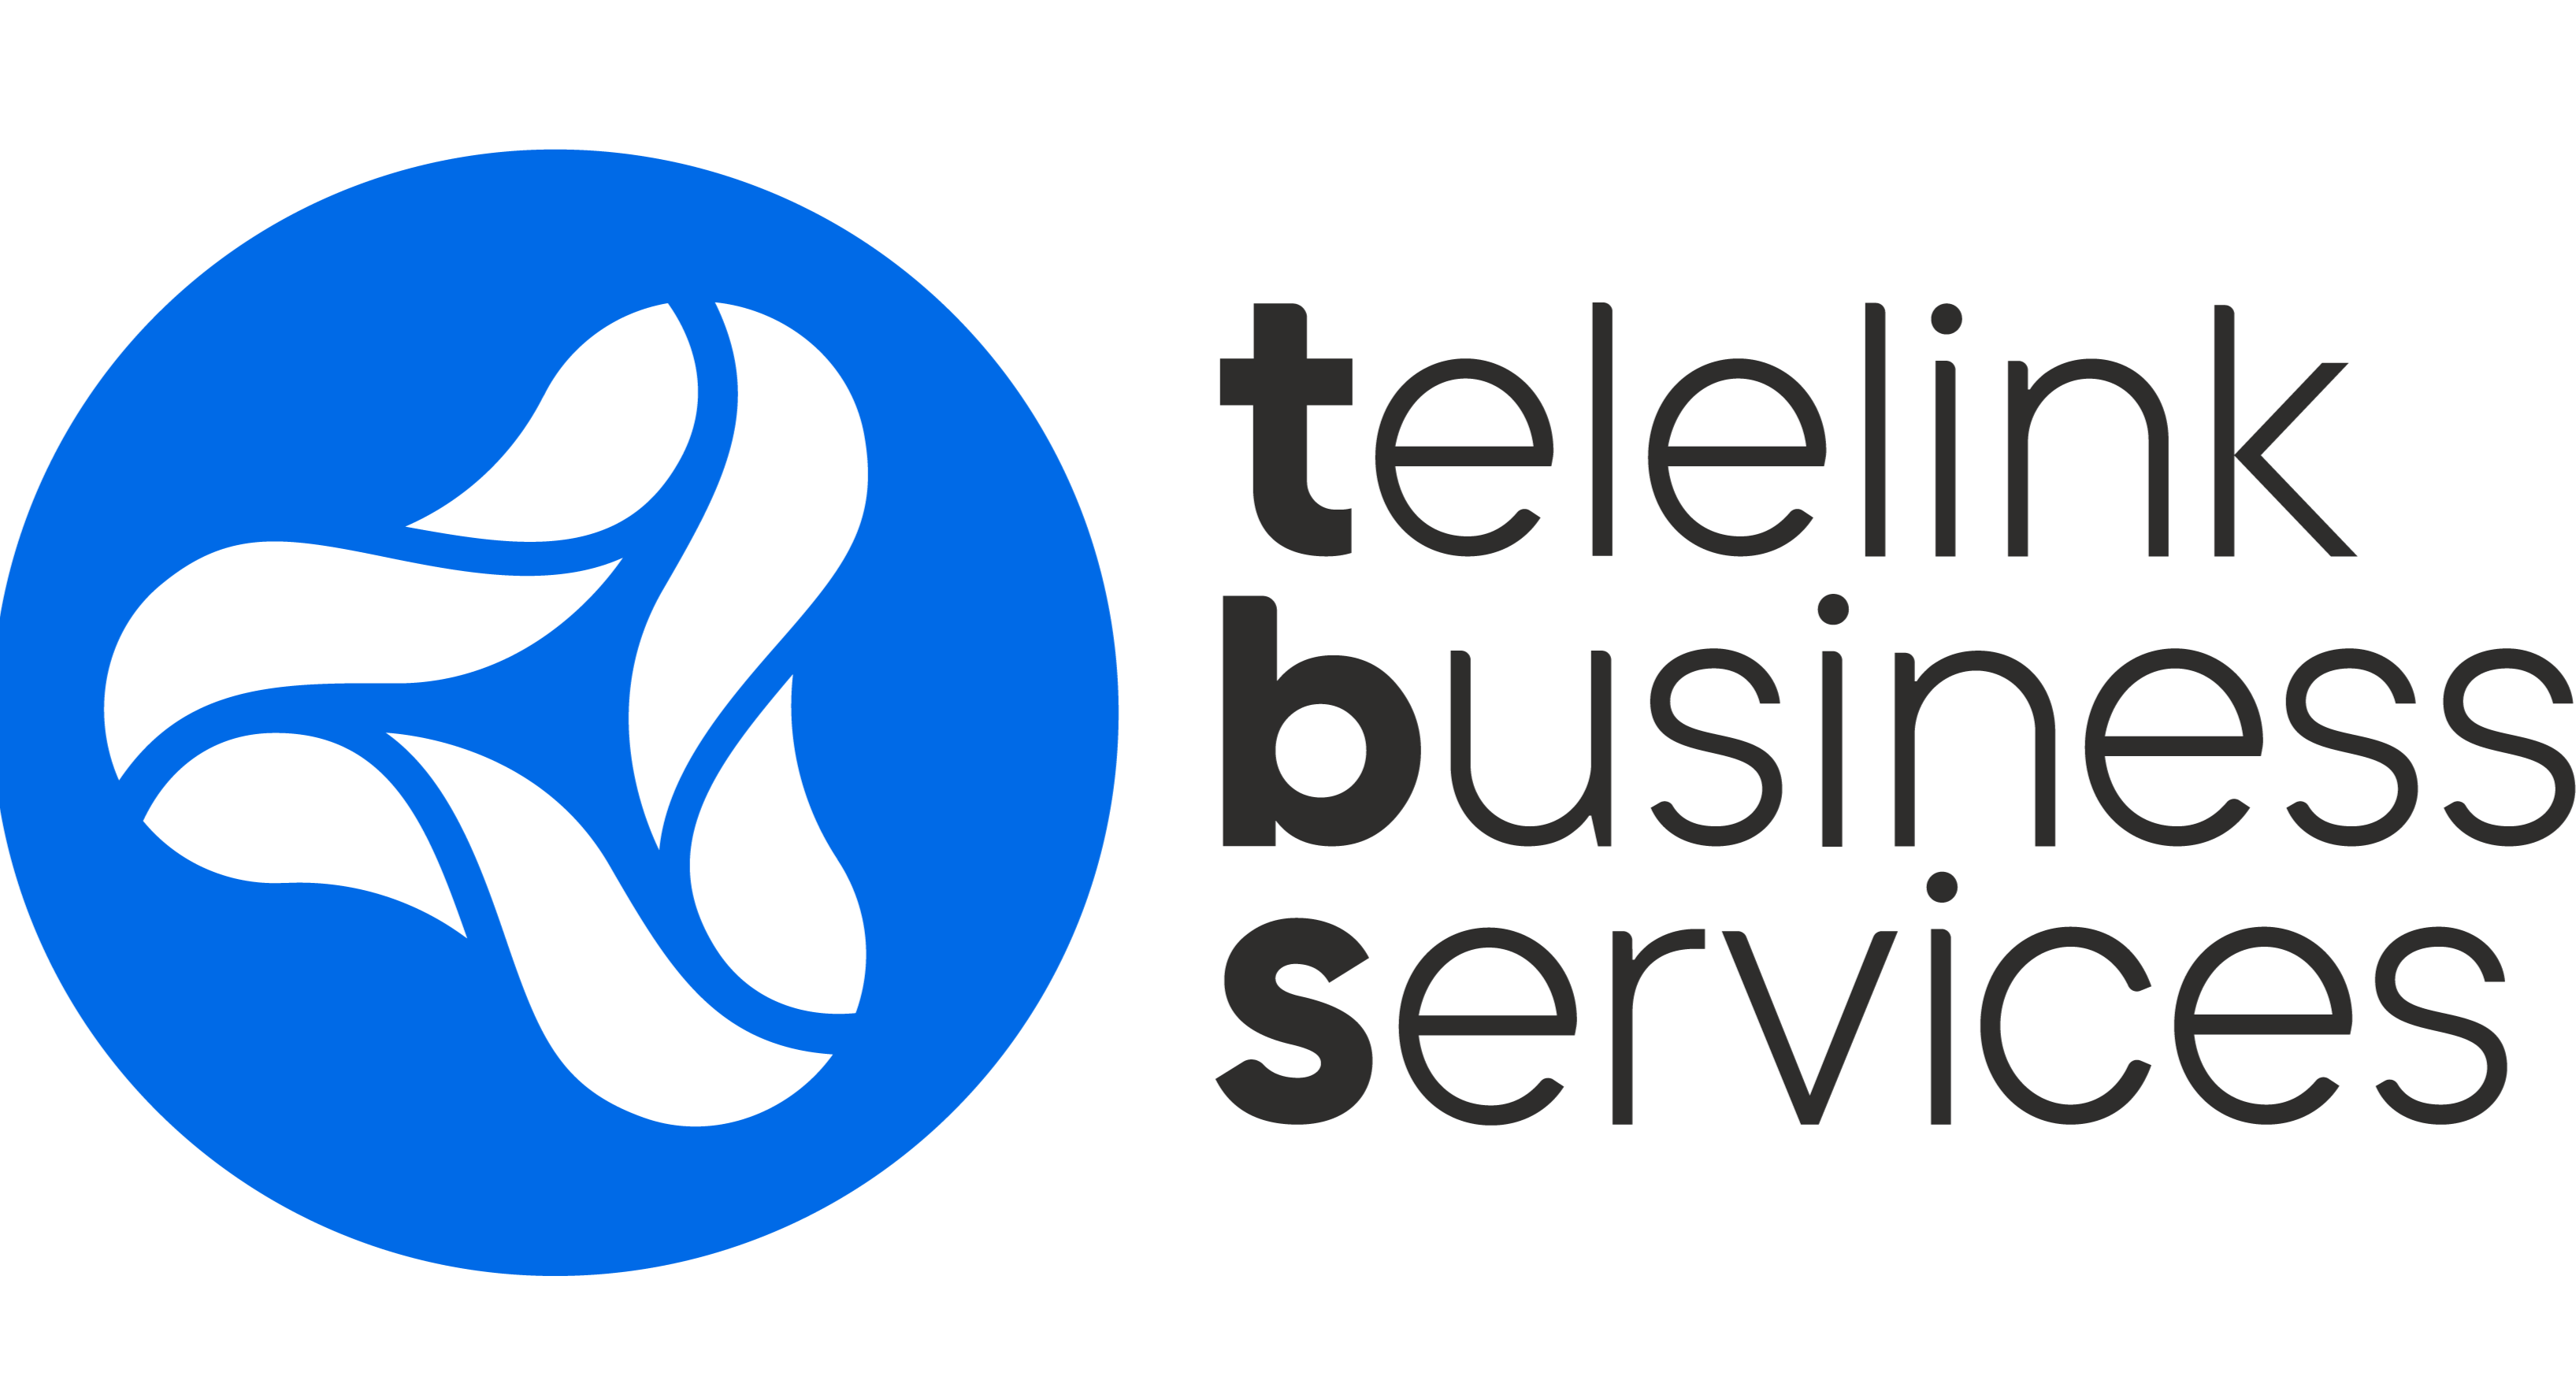 Telelink Business Services logo